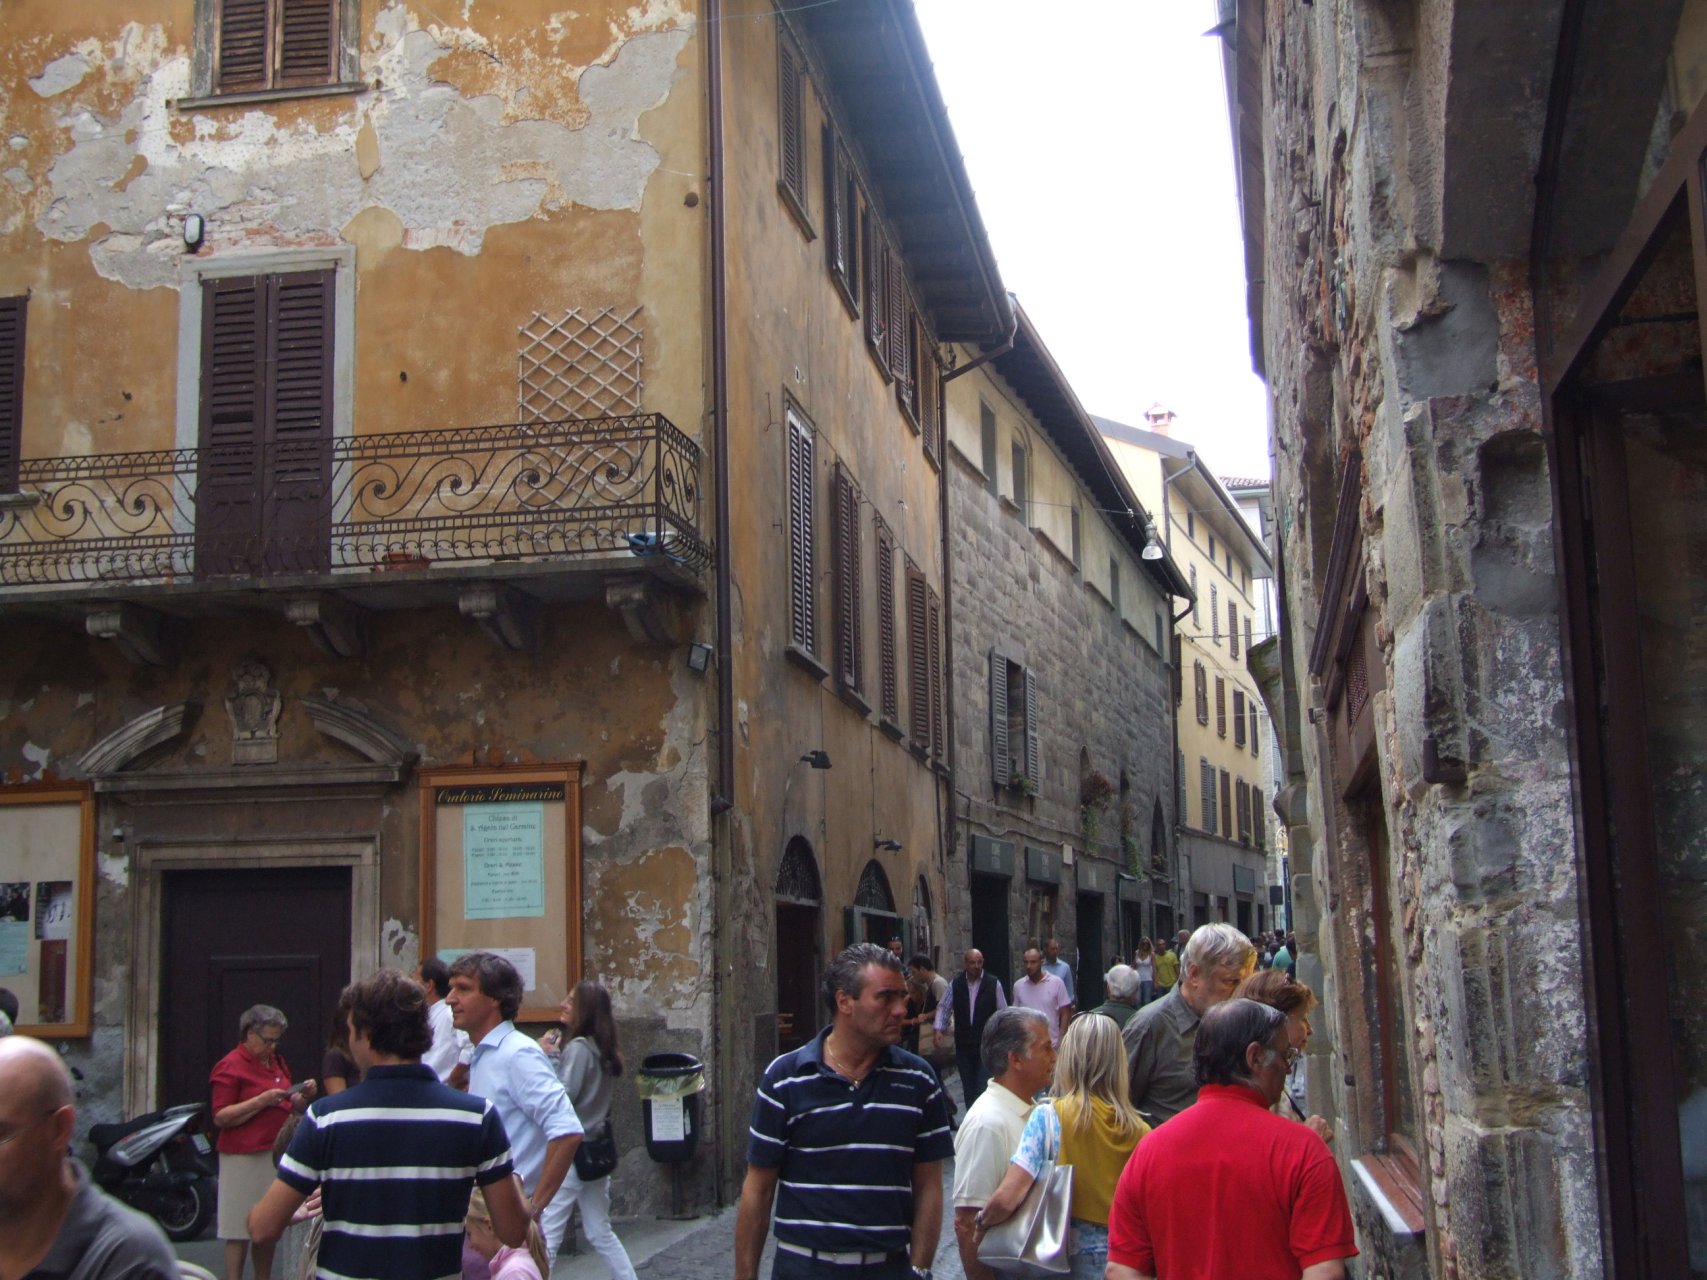 Urokliwe uliczki starego Bergamo